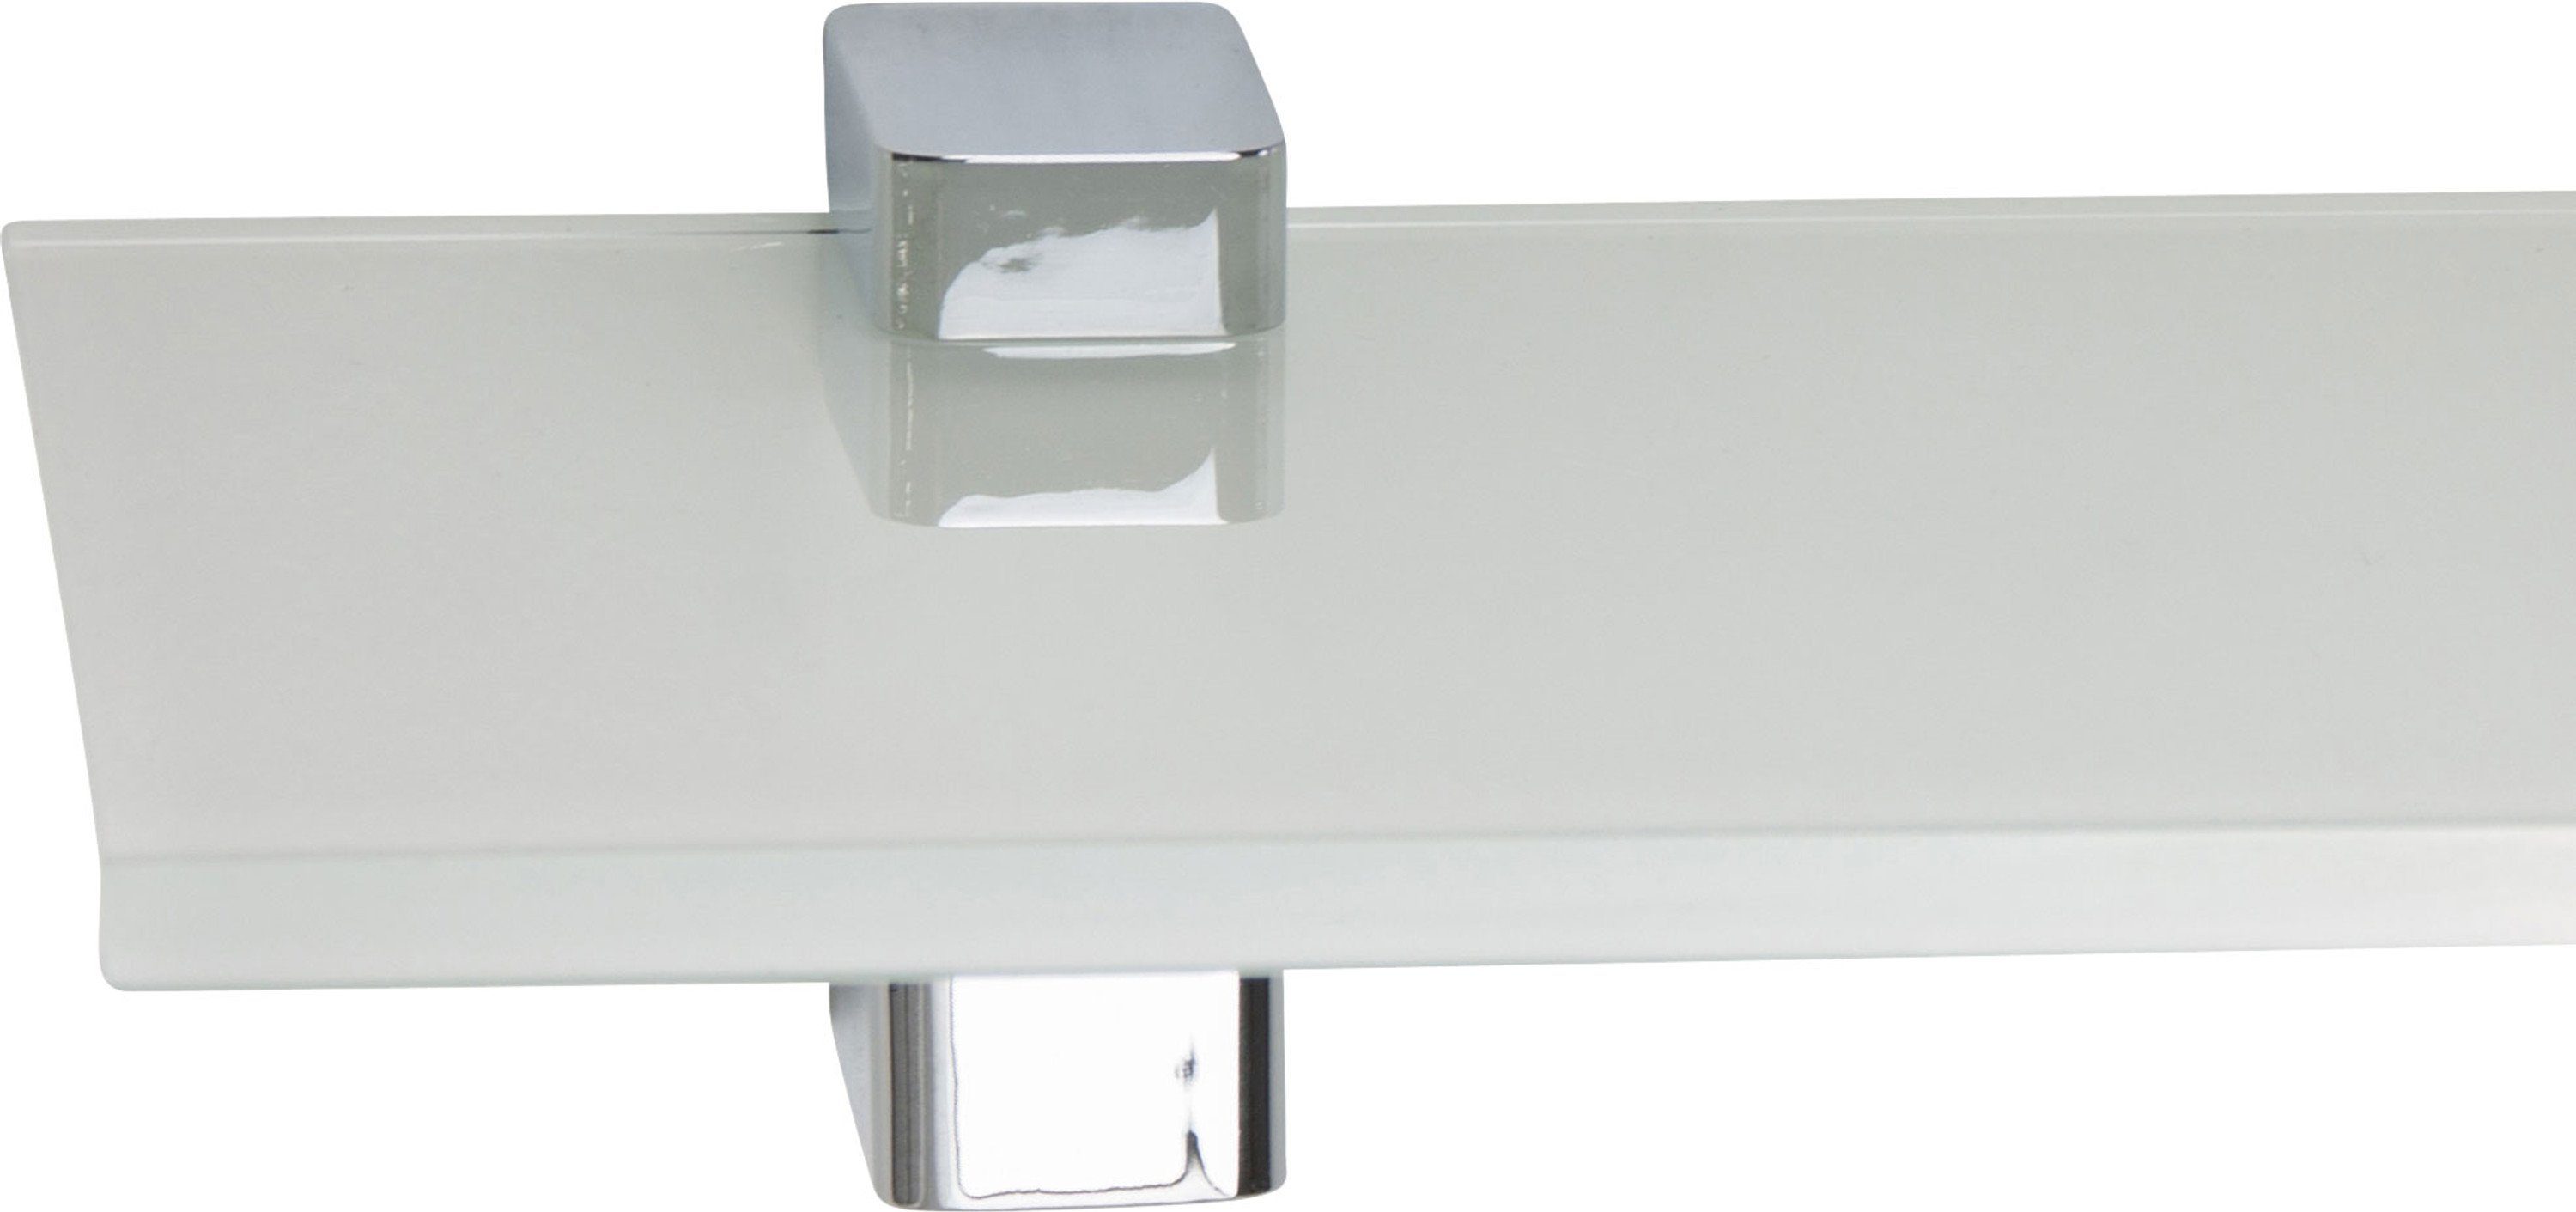 ib style Wandregal Glasregal 8mm eckig weiß 40 x 15 cm + Clip CONO Verchromt, Glasboden aus ESG-Sicherheitsglas - Wandregal